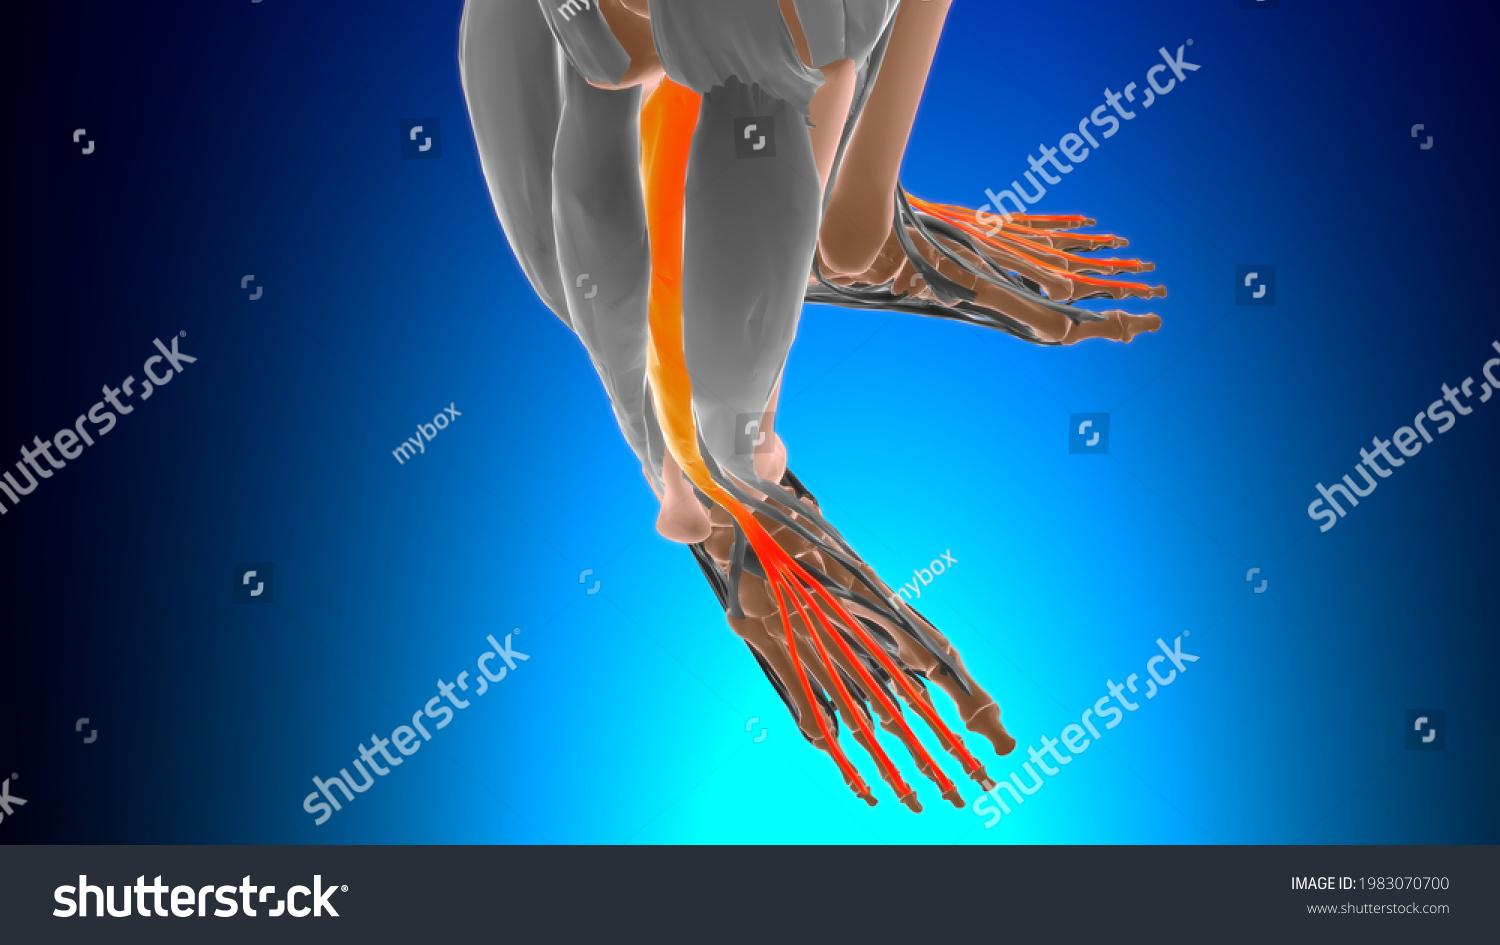 Extensor Digitorum Longus Muscle Anatomy Medical Stock Illustration Shutterstock